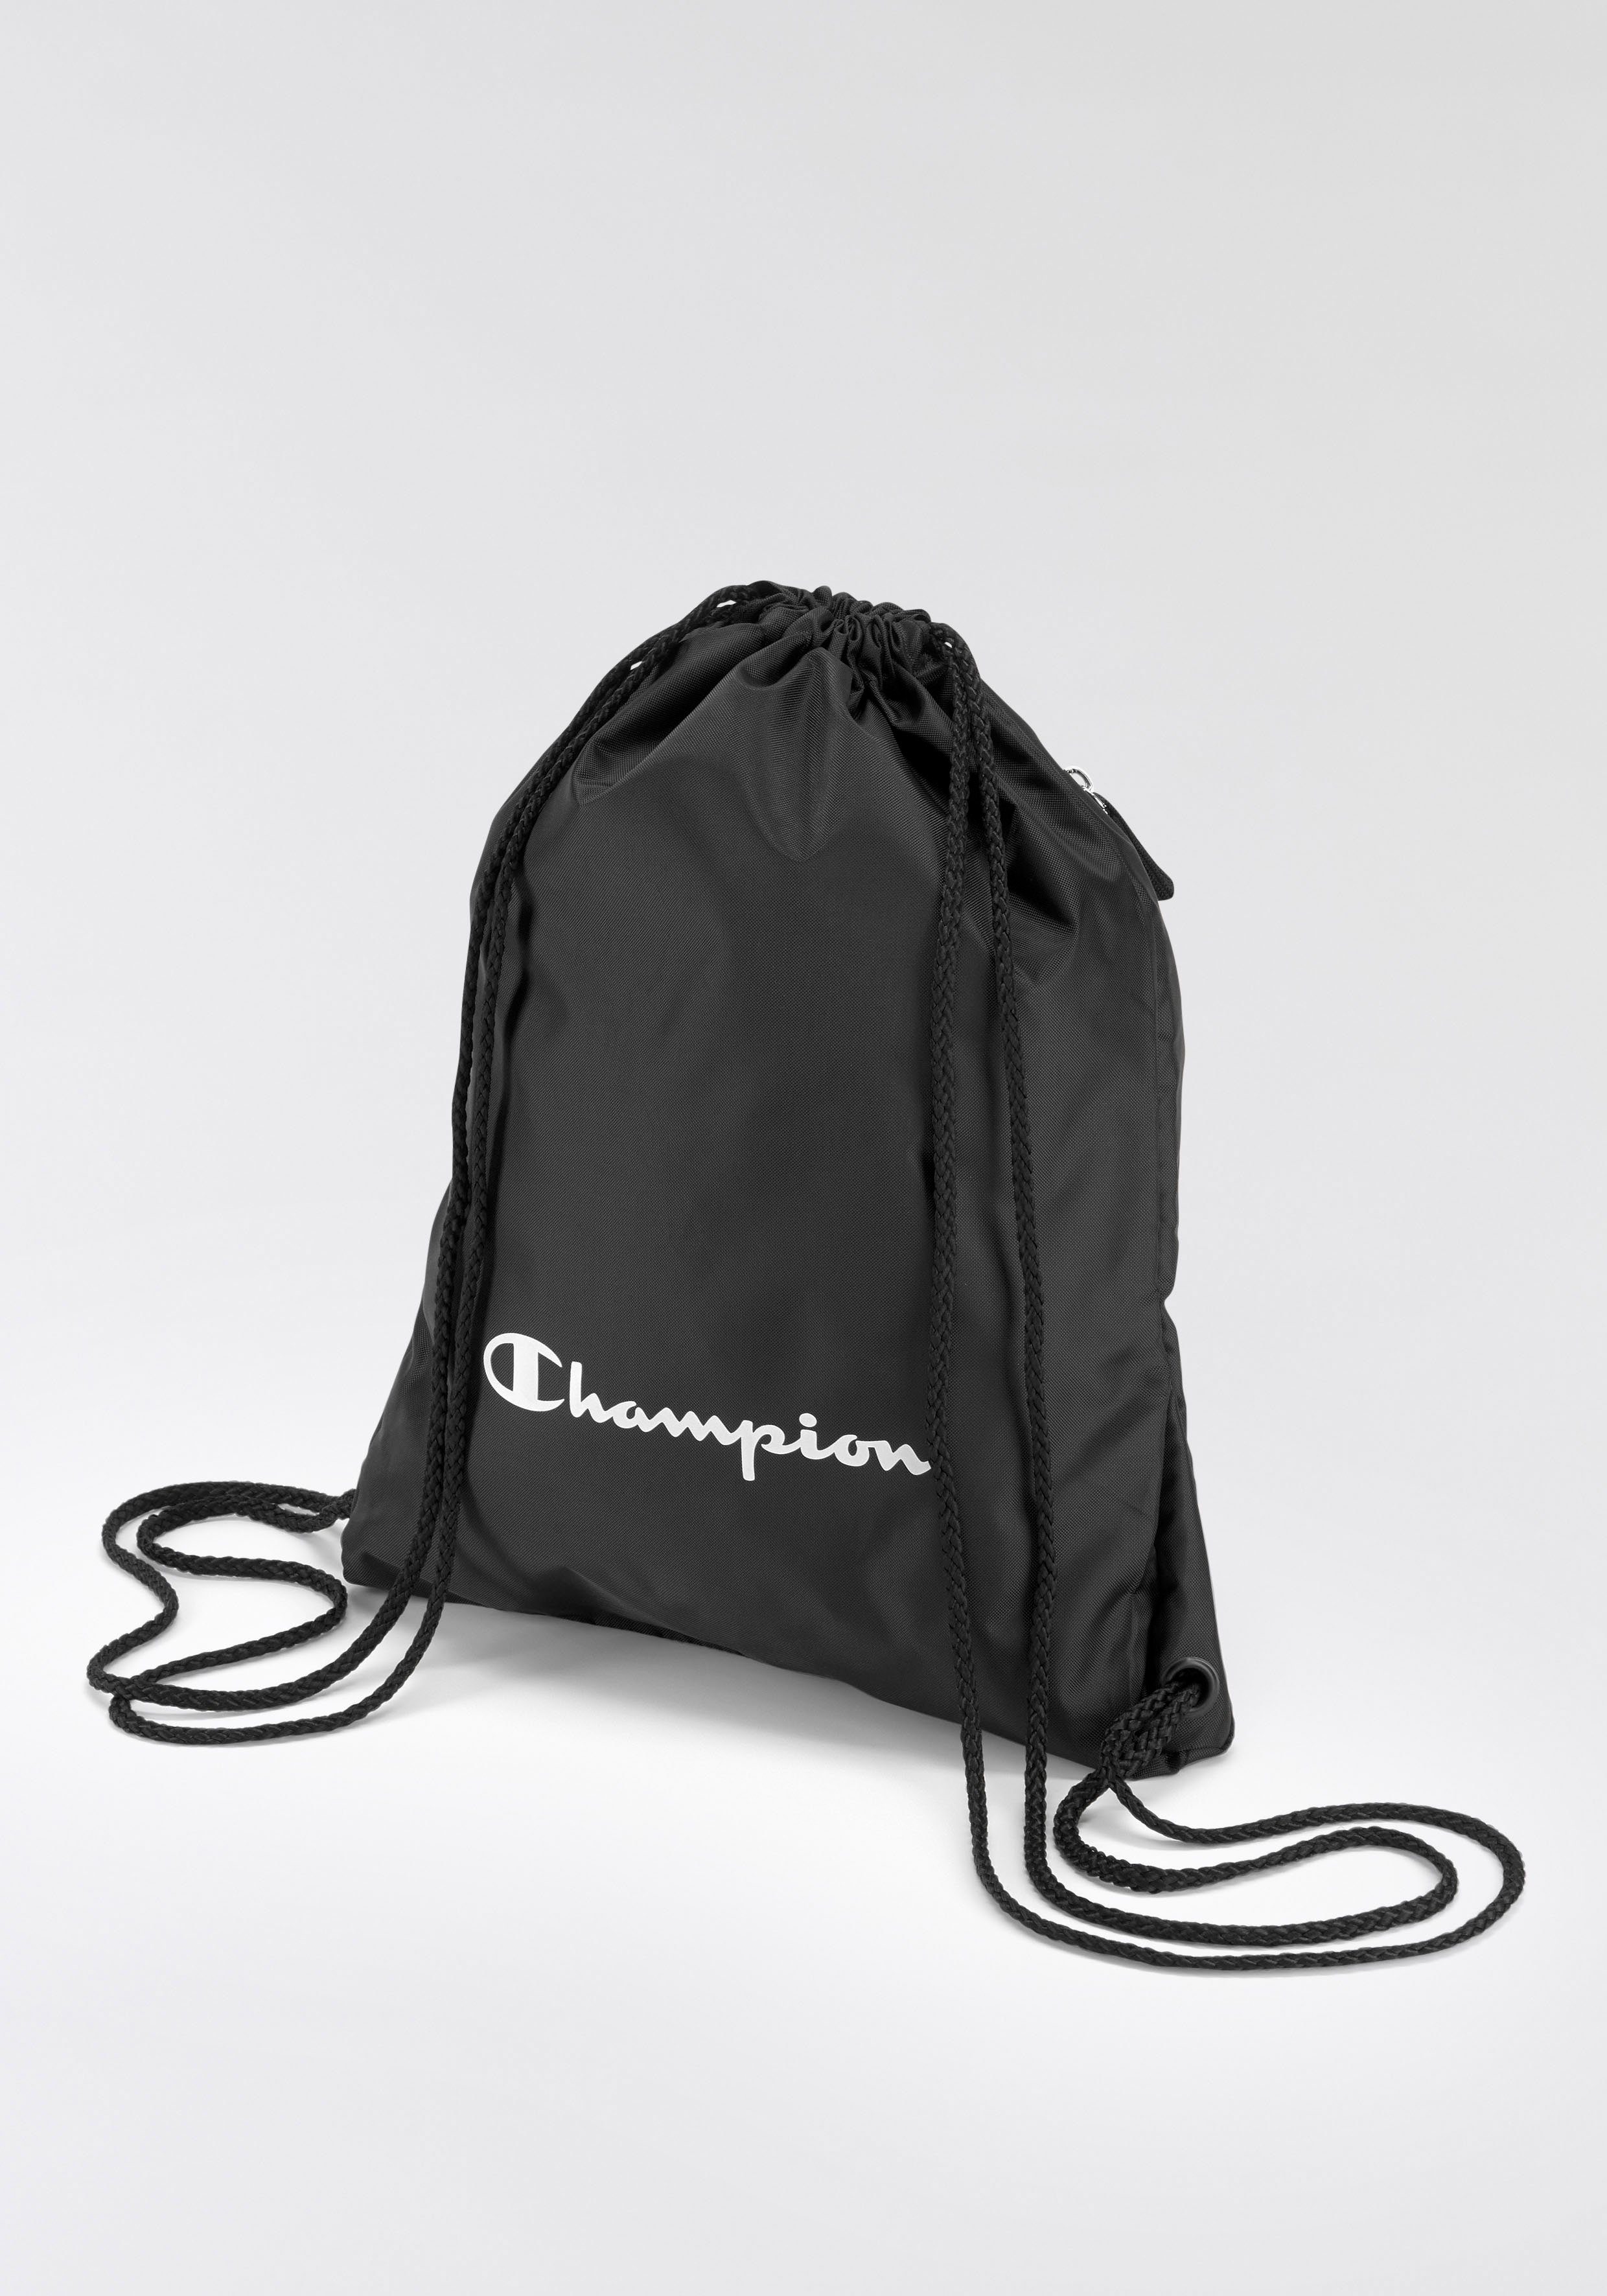 Champion Sportrucksack Athletic Satchel | Daypacks